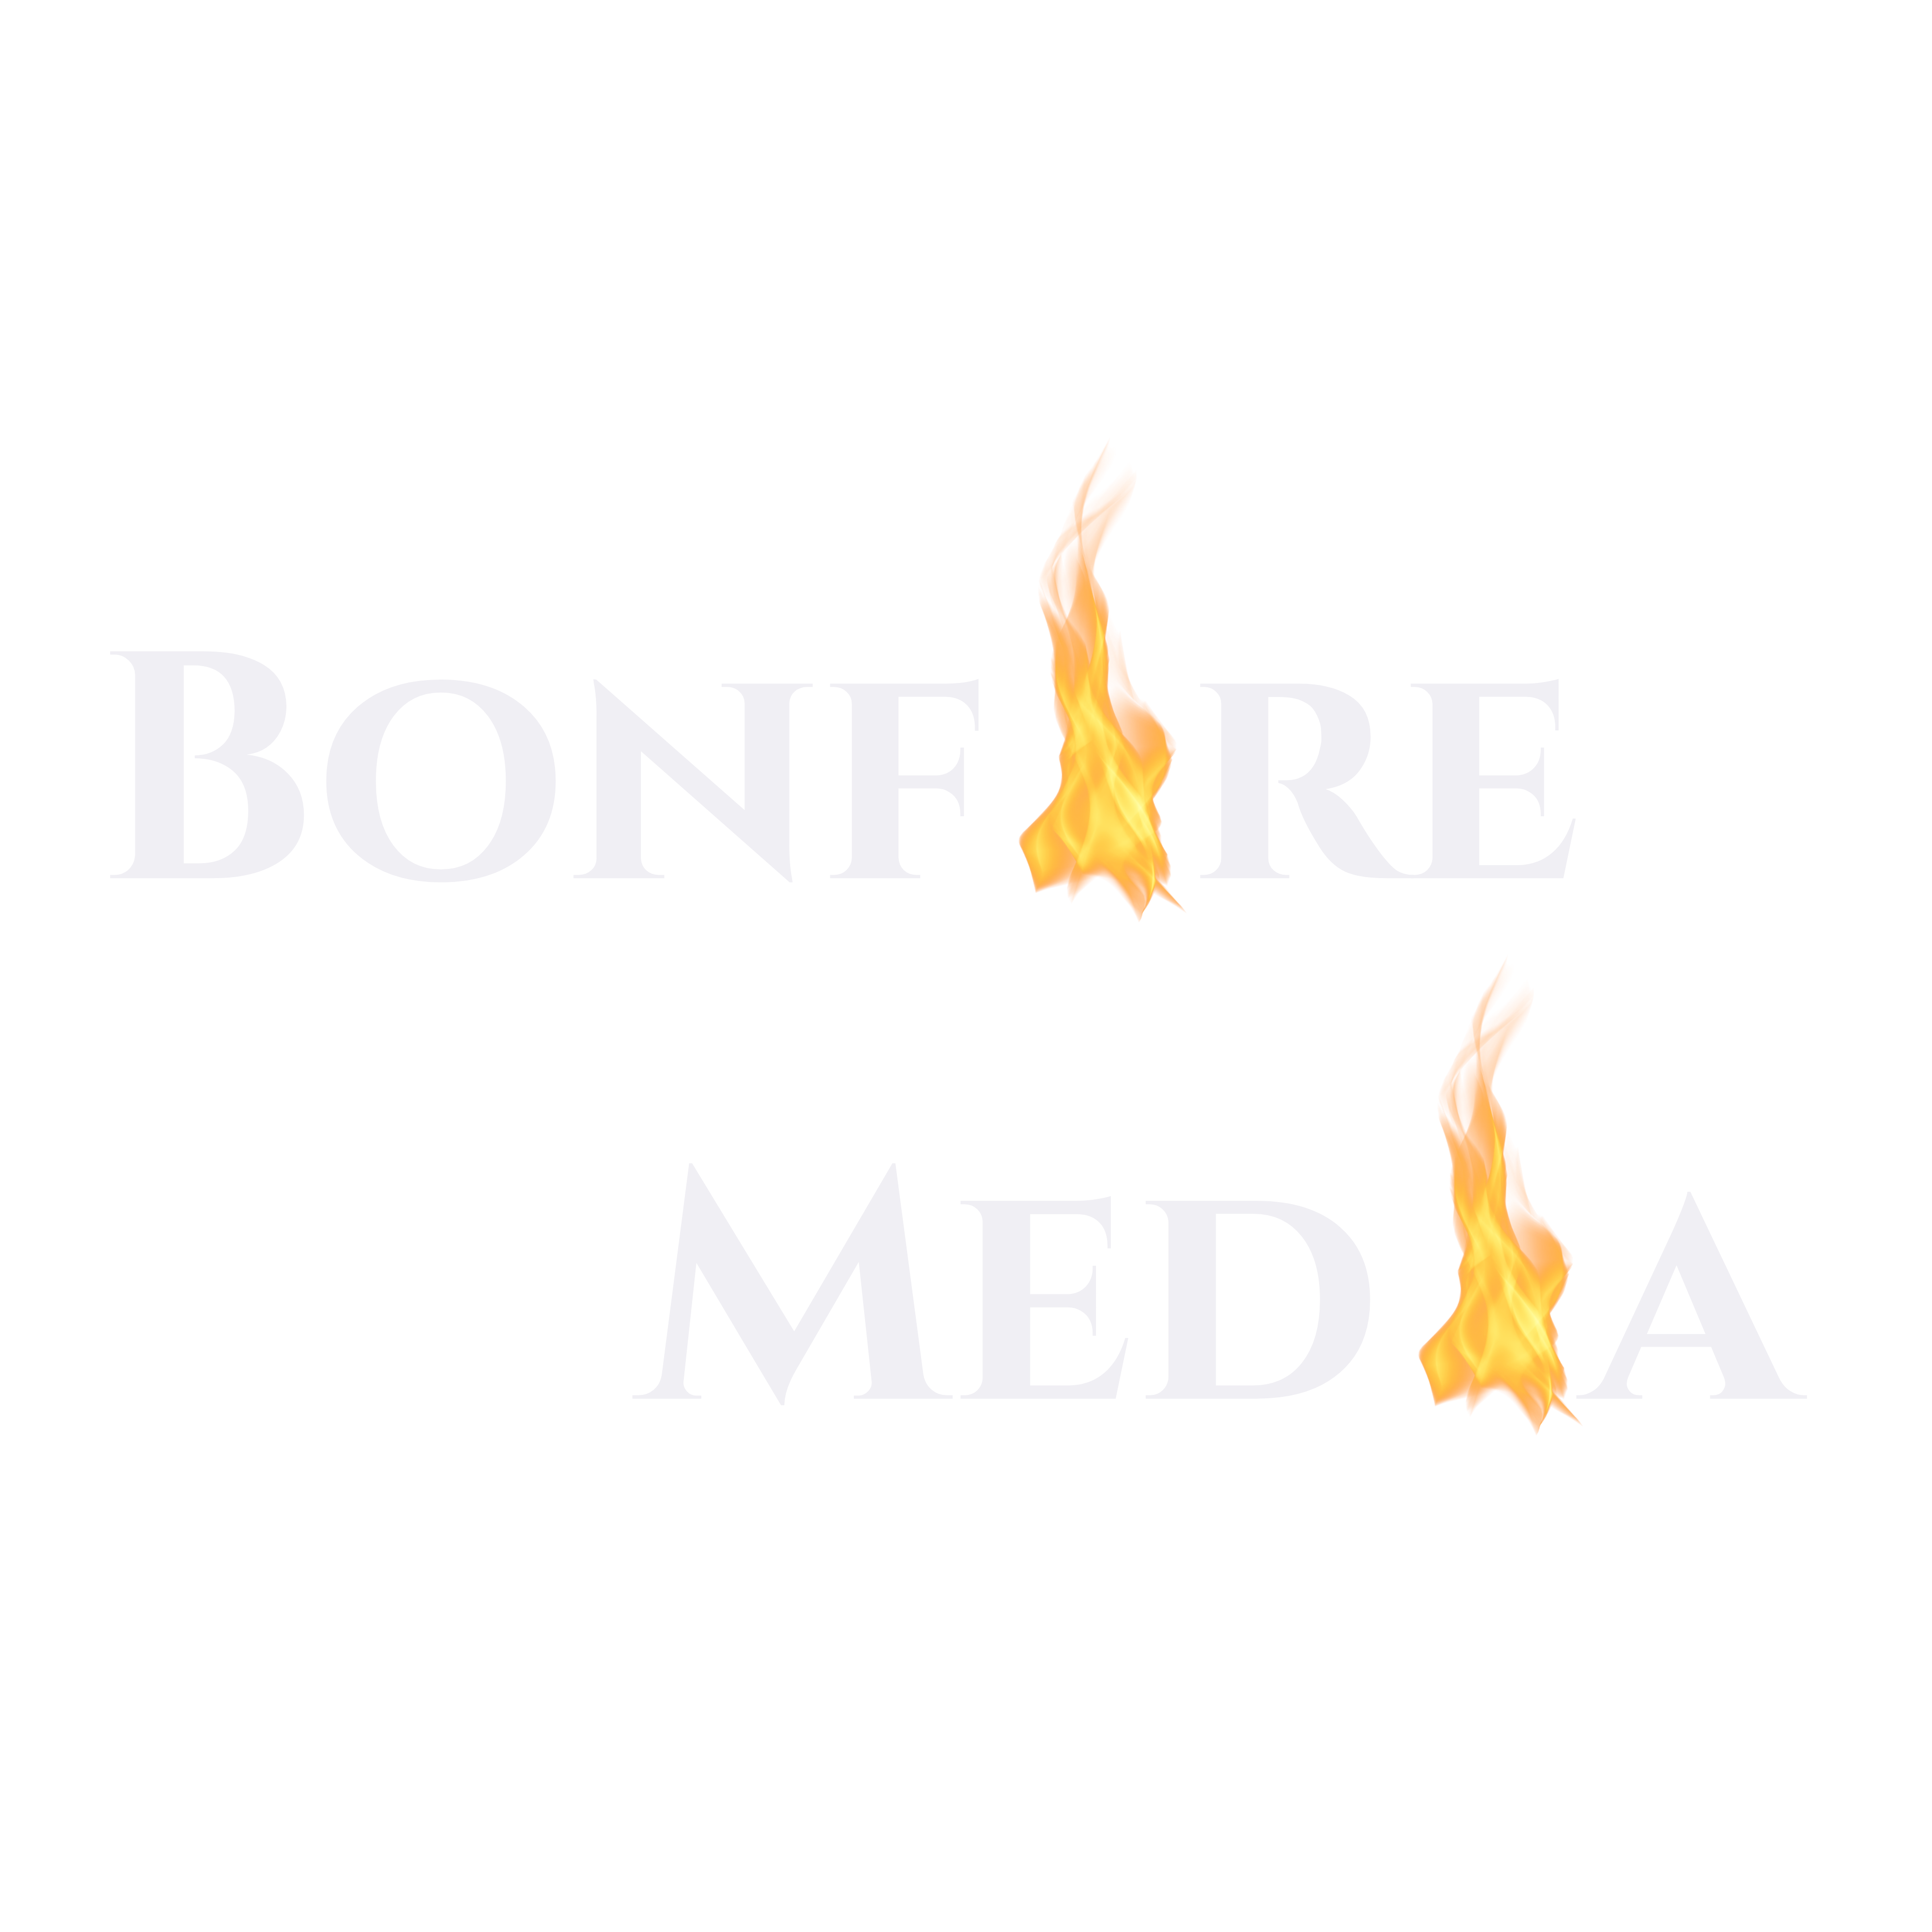 The Bonfire Store